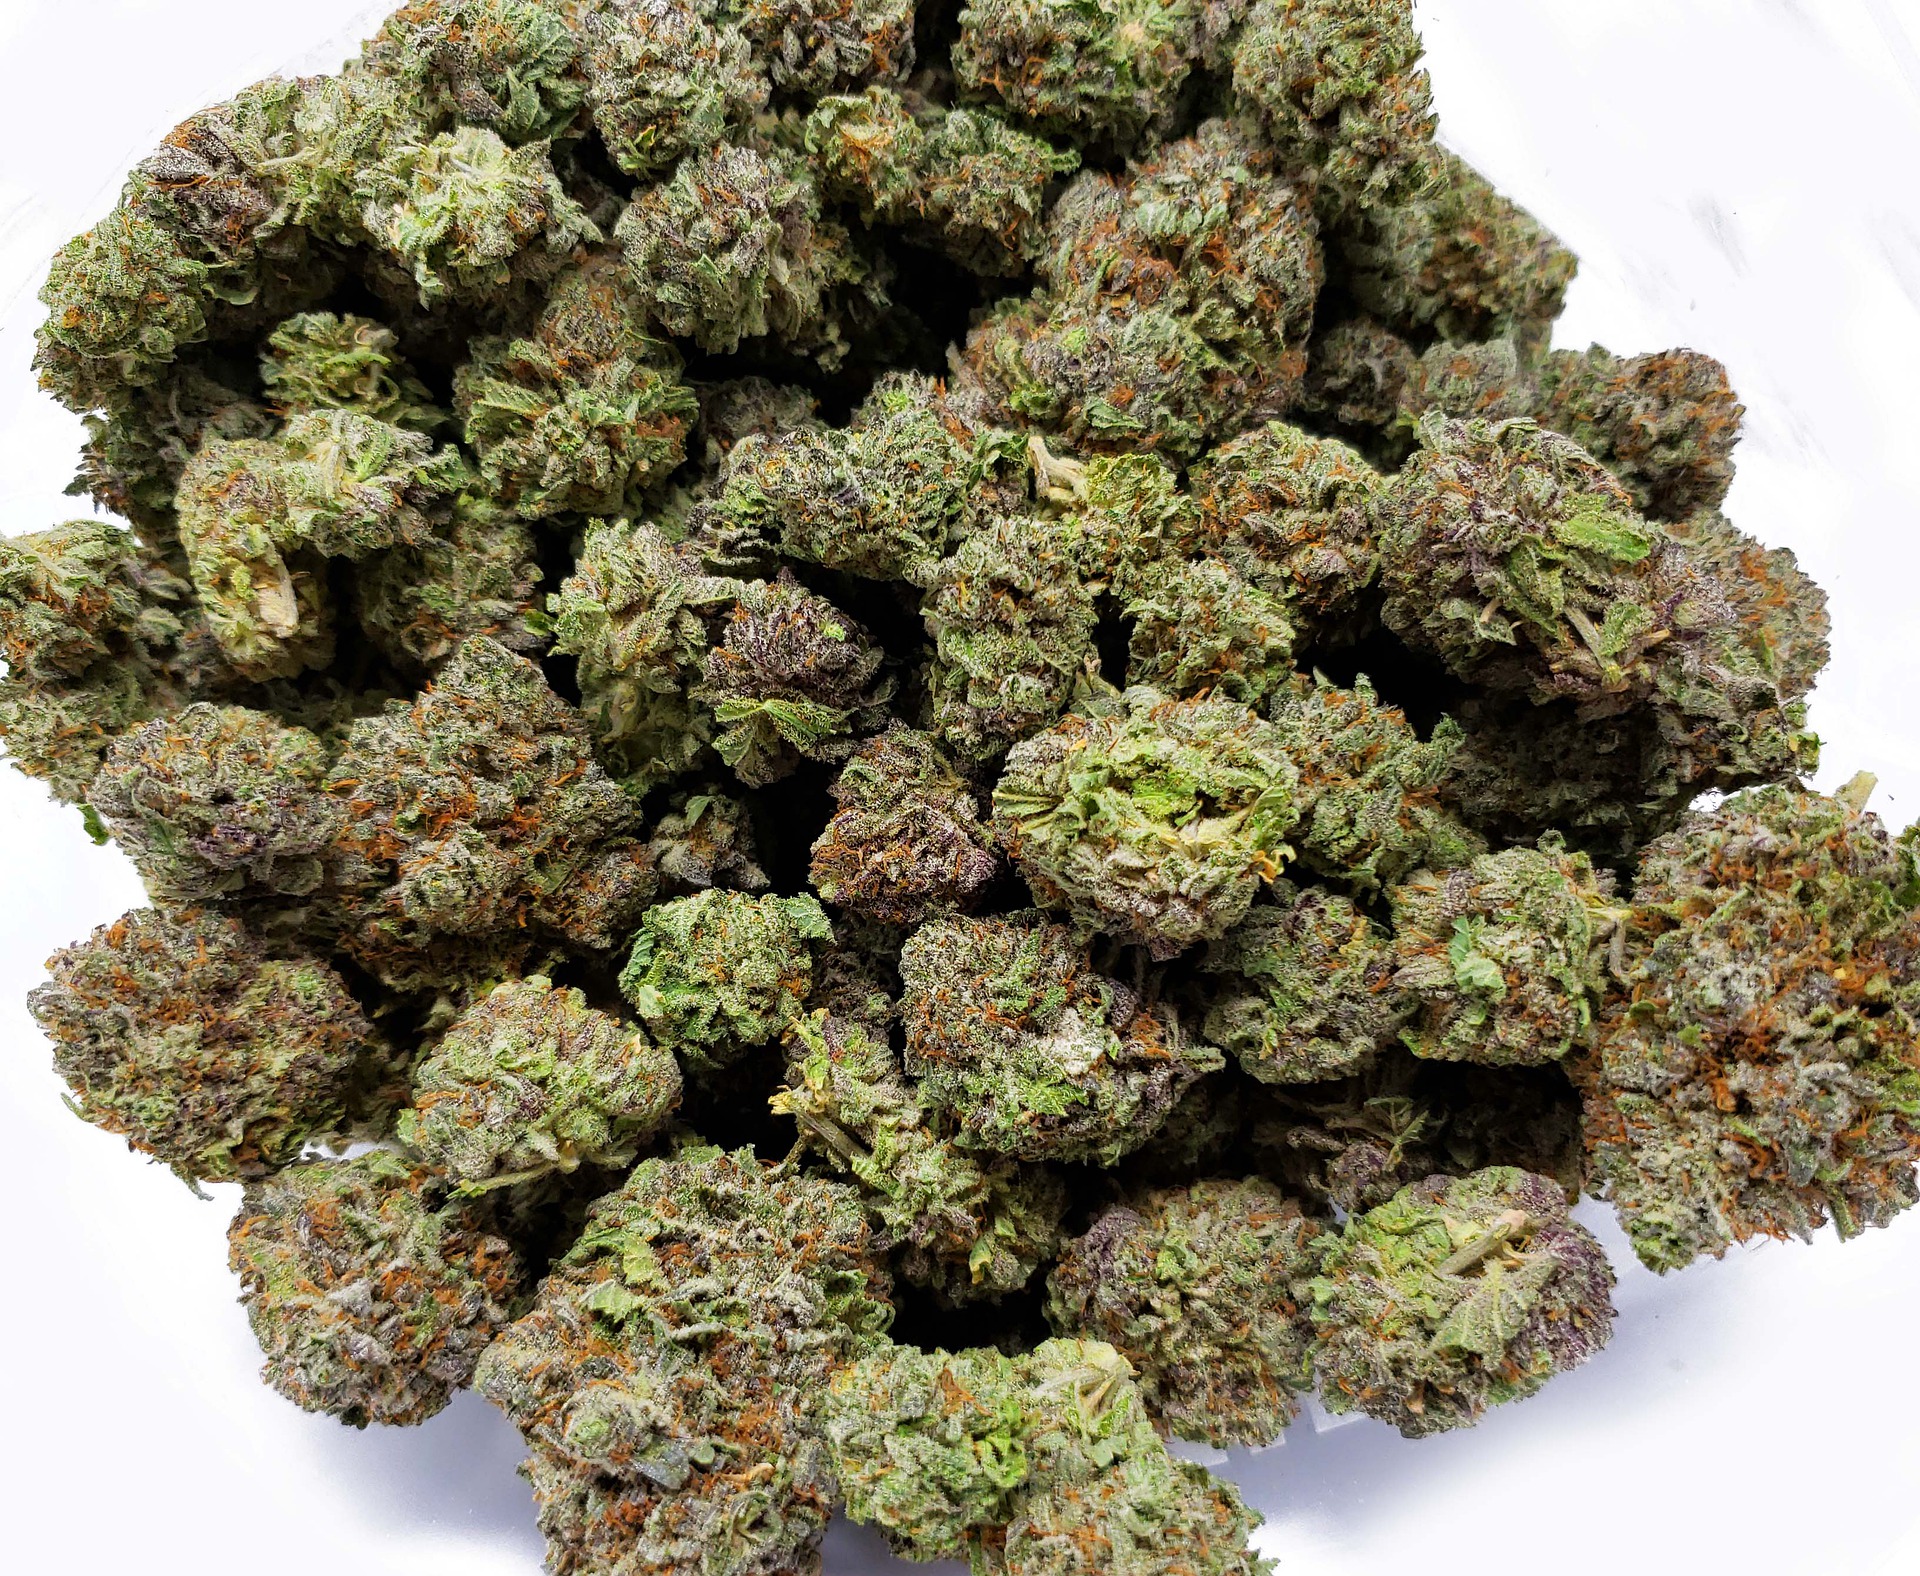 cannabis buds on display